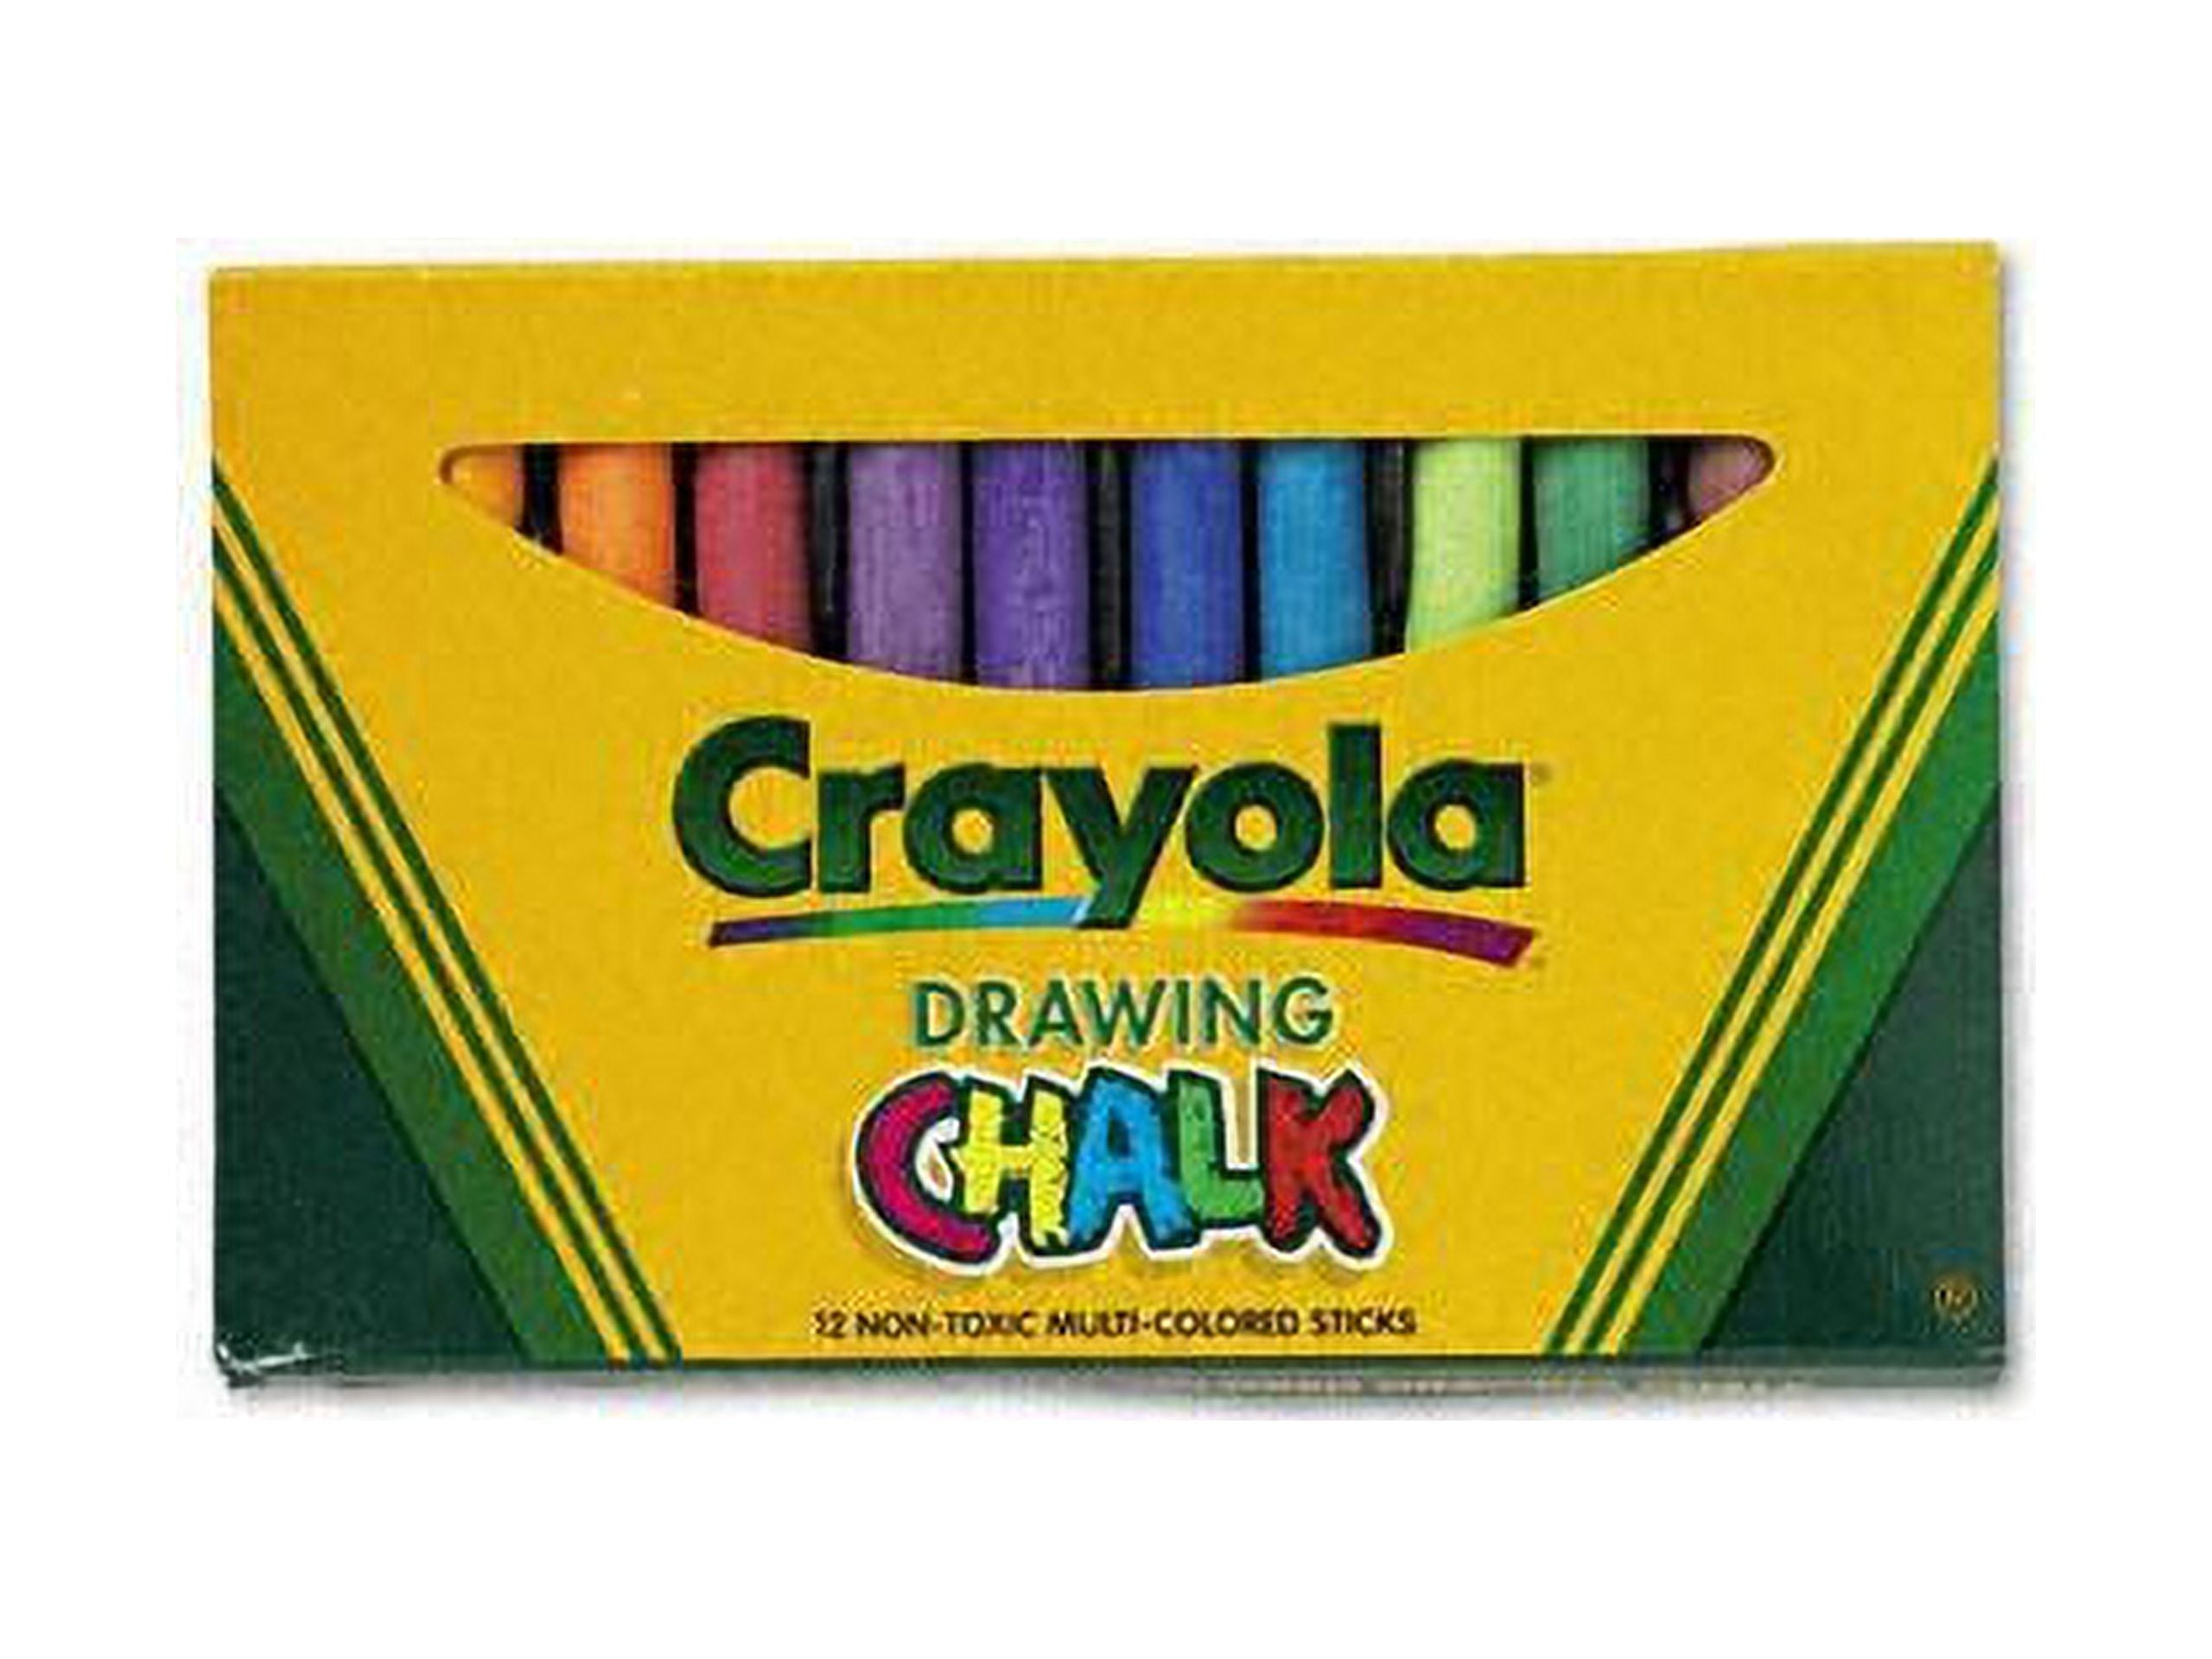 Crayola Drawing Chalk, Bulk Art Supplies, 144 Count, Crayola.com